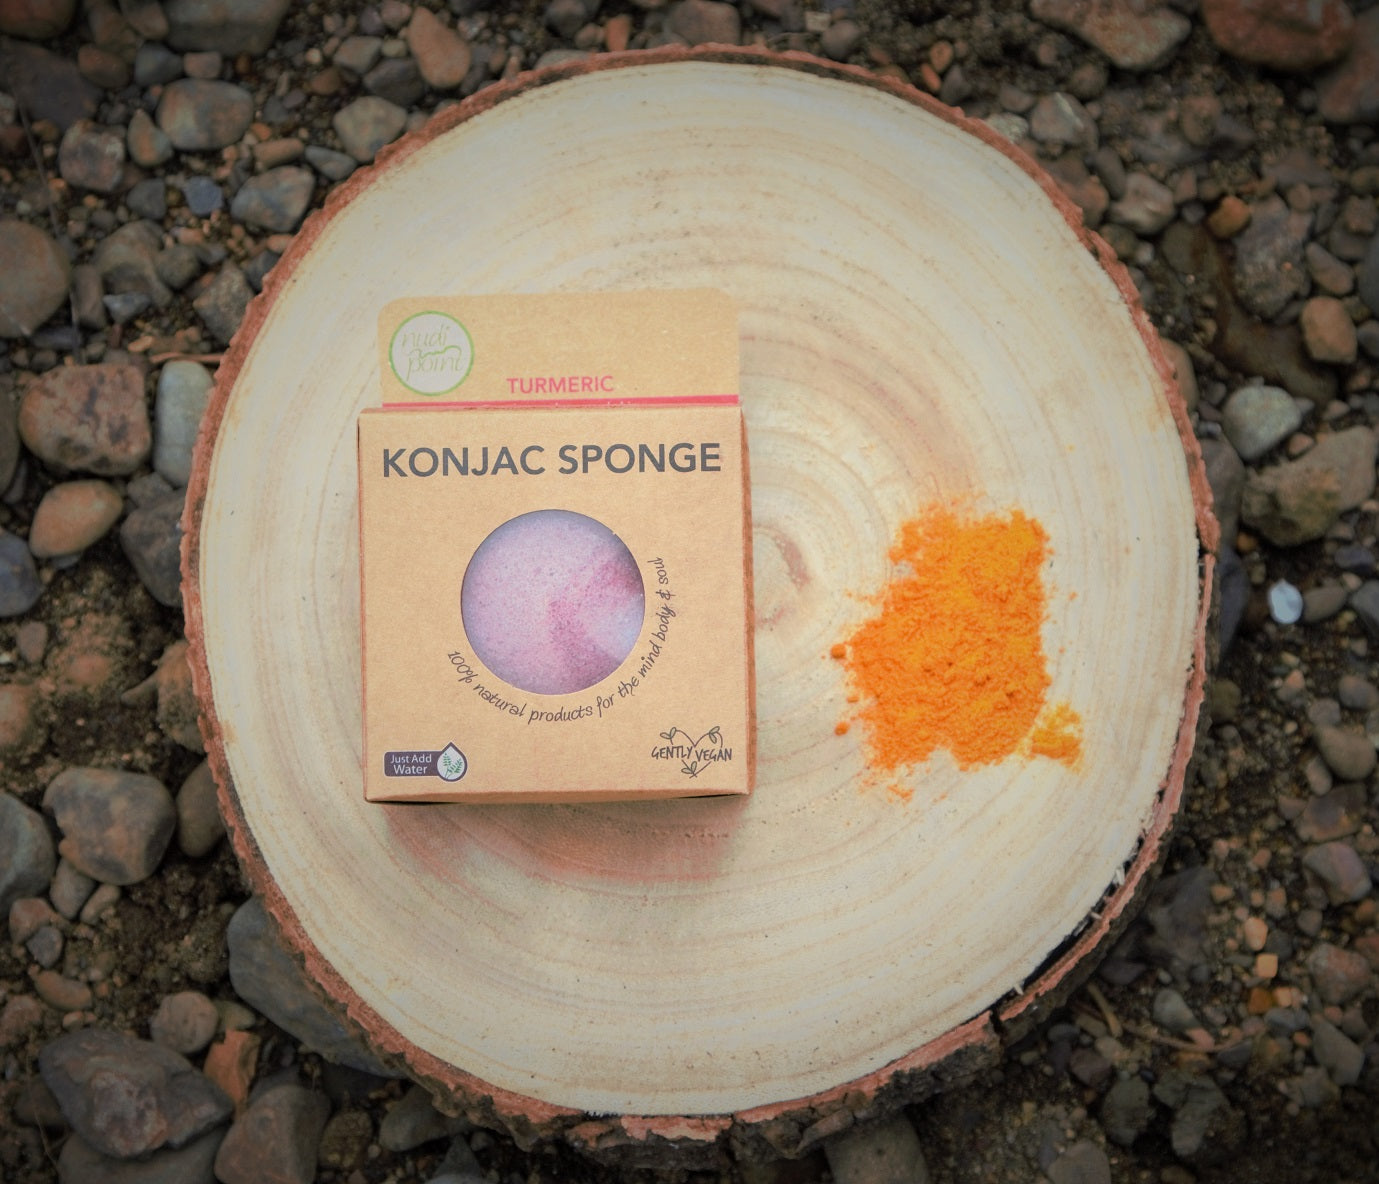 Turmeric Konjac Sponge (for dry or damaged skin)